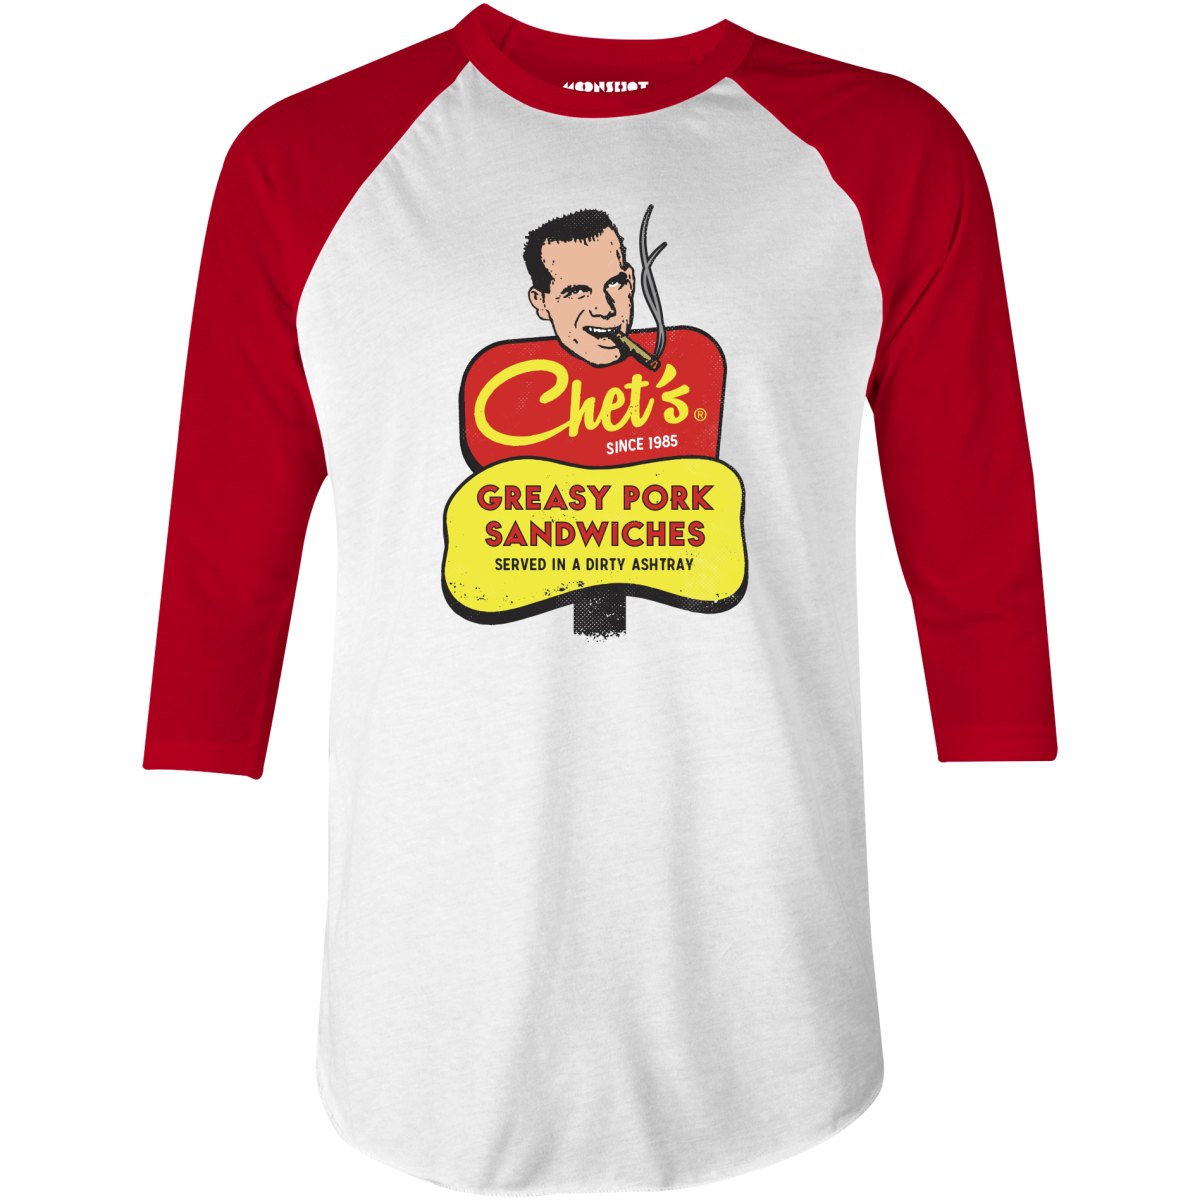 Chet's Greasy Pork Sandwiches - 3/4 Sleeve Raglan T-Shirt